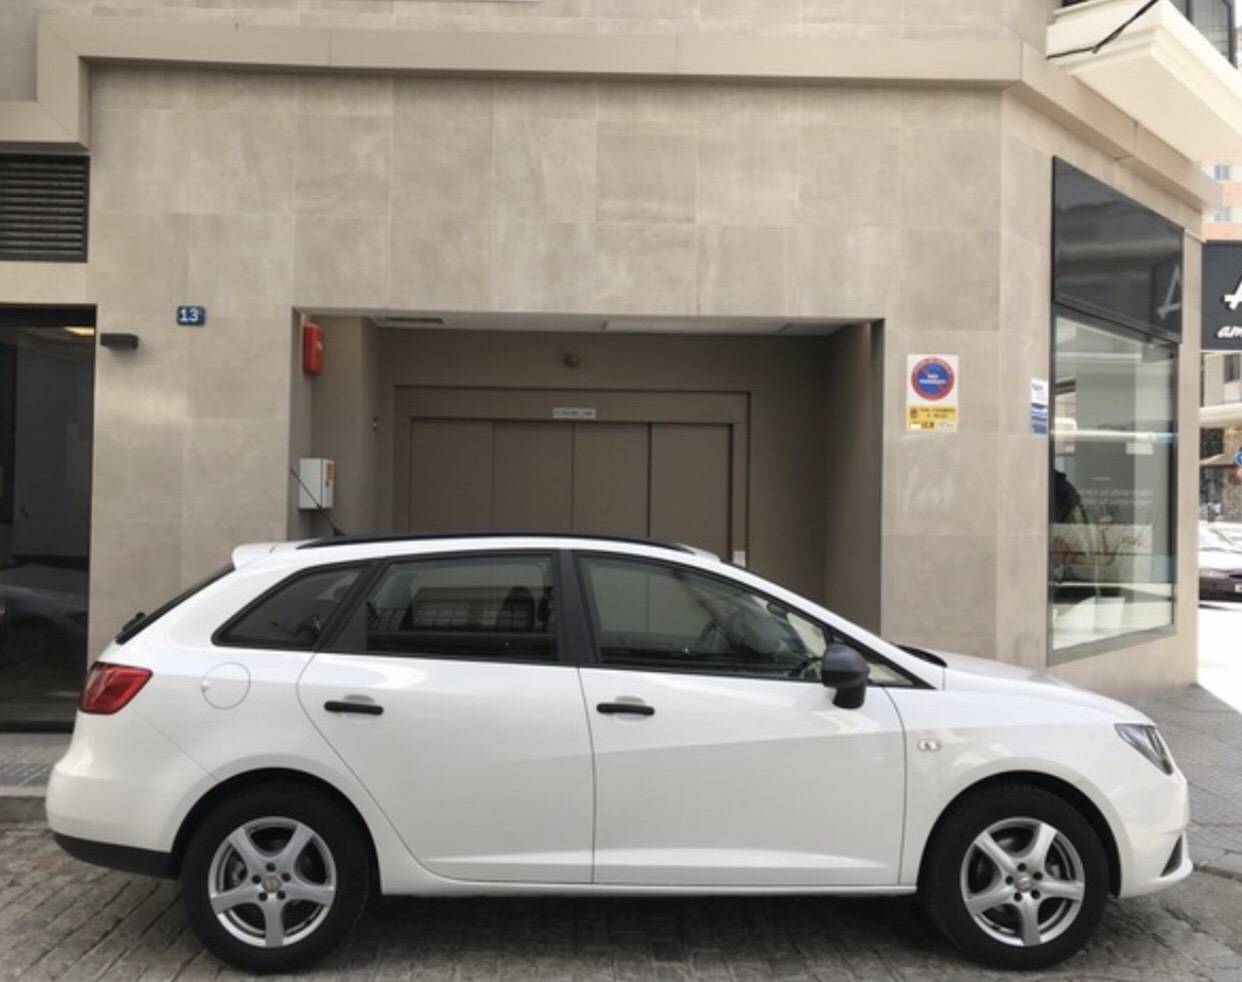 Buy SEAT IBIZA ST 2016 1.2 TSI 90CV second hand car in Málaga. With the guarantee of Larios Rental